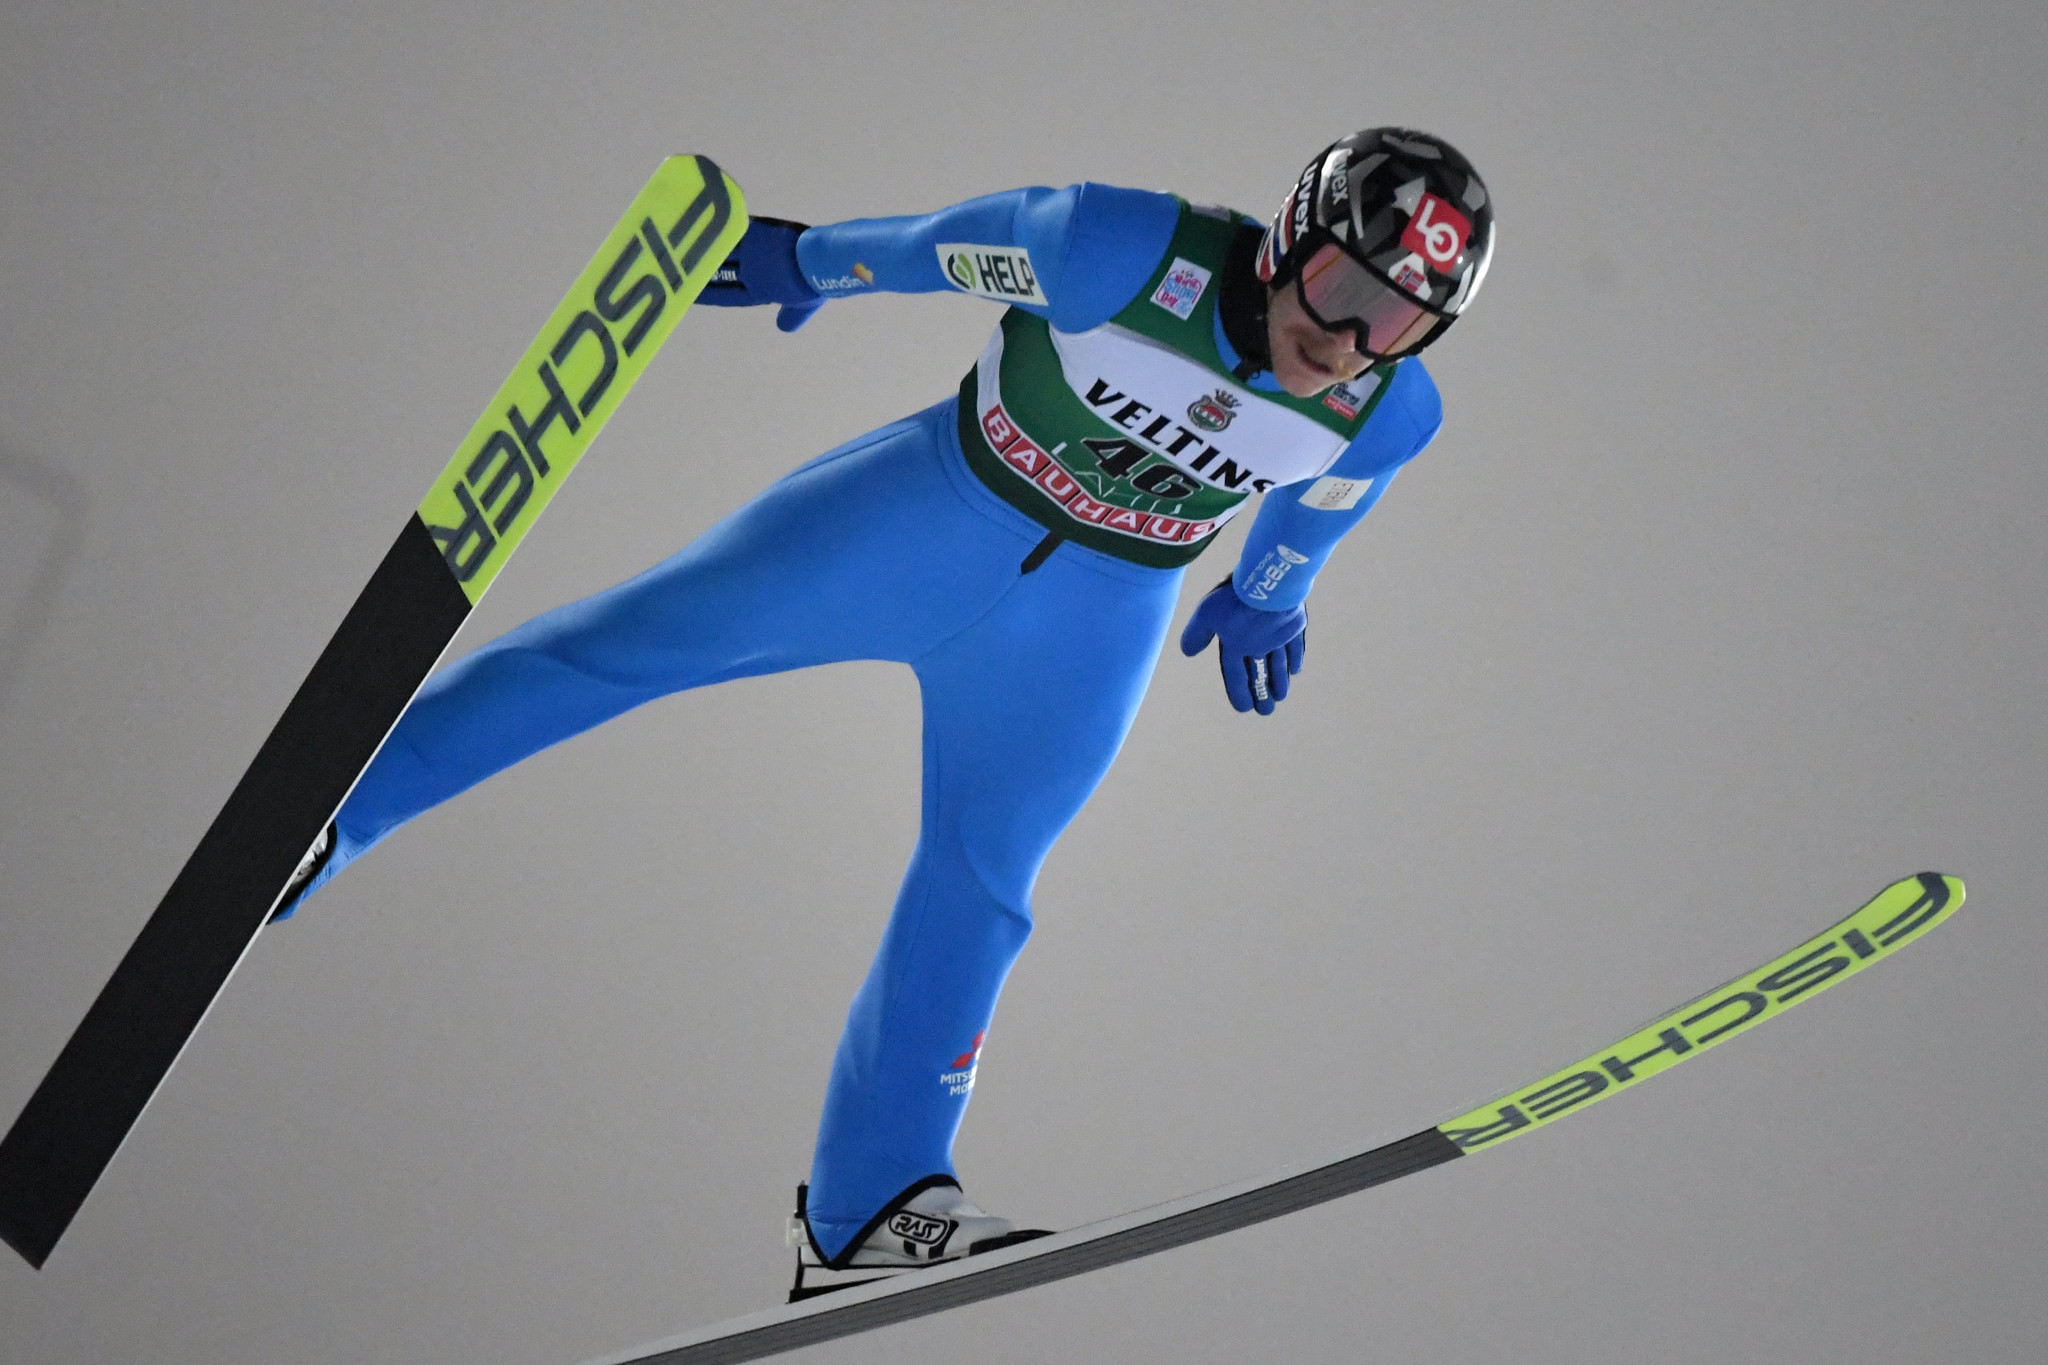 Consistent Johansson picks up third career Ski Jumping World Cup win